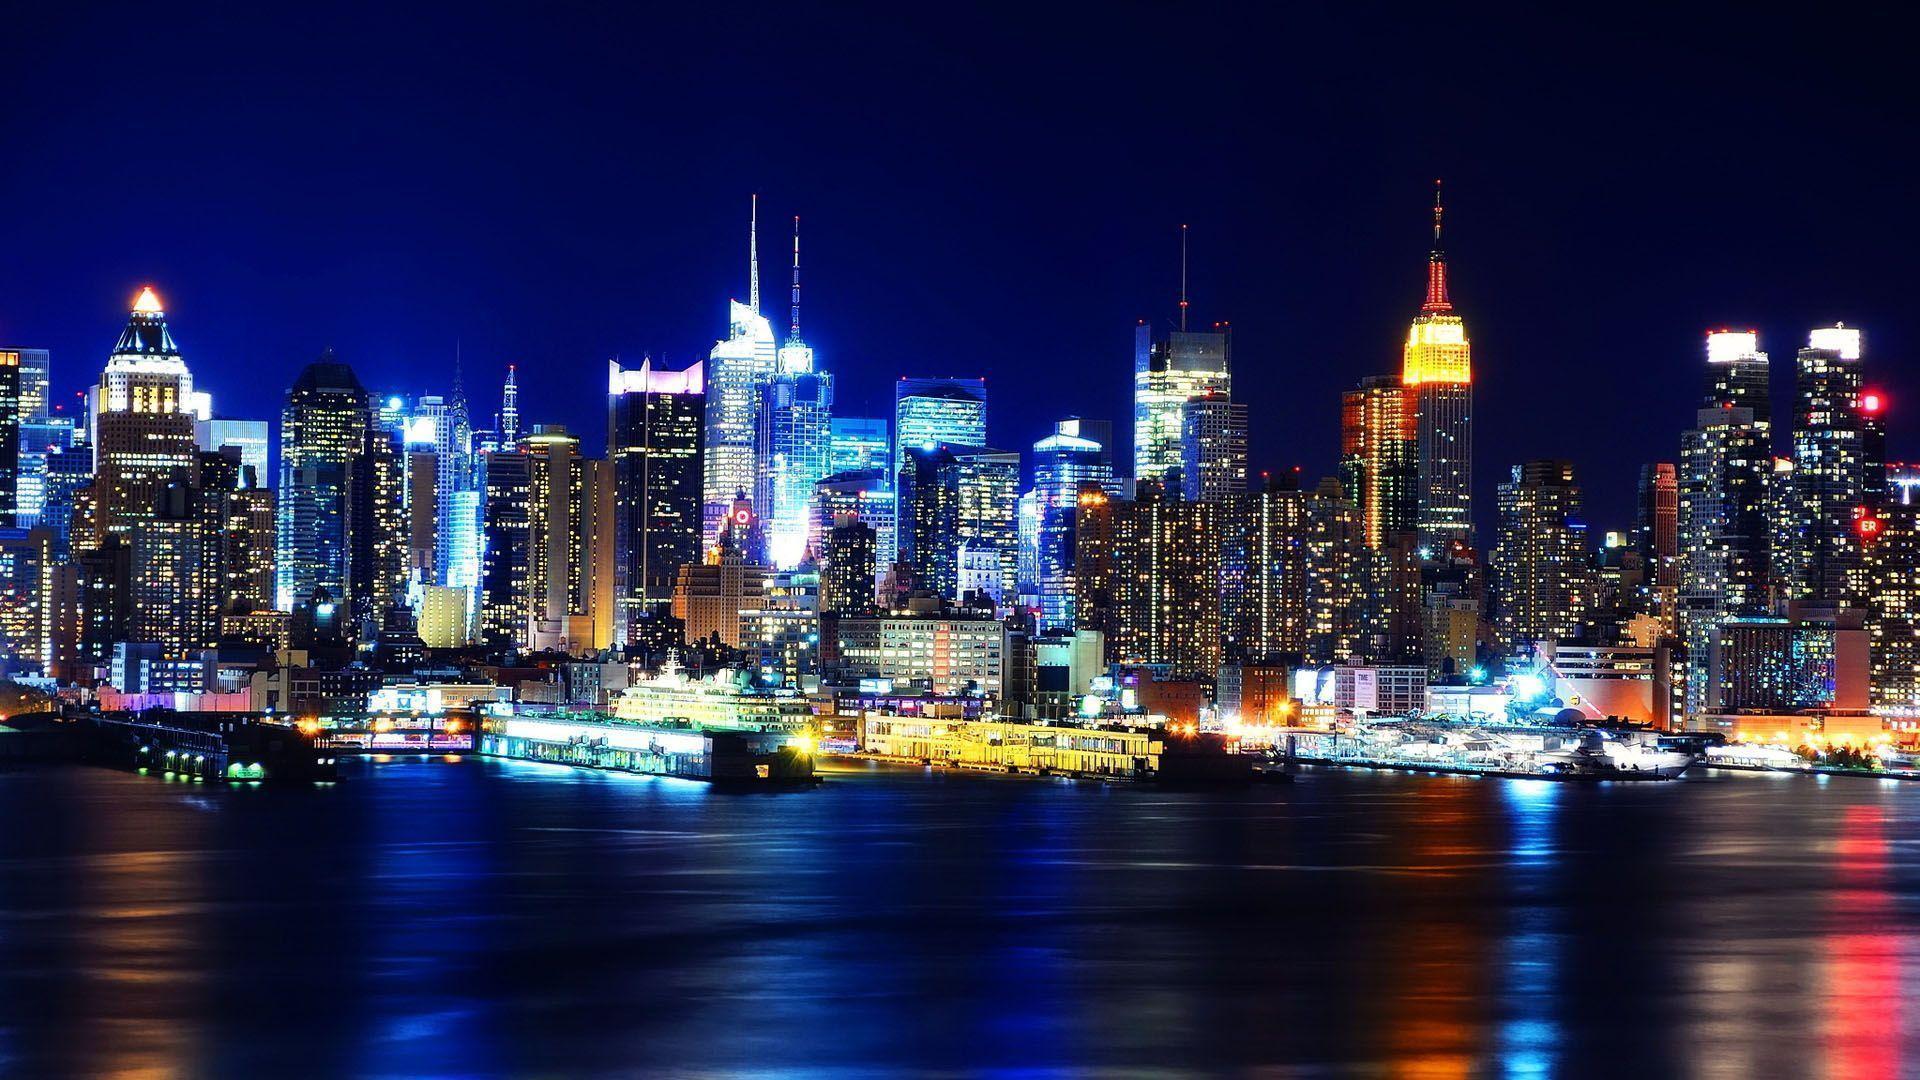 New York Night Skyline Wallpaper 39006 in City